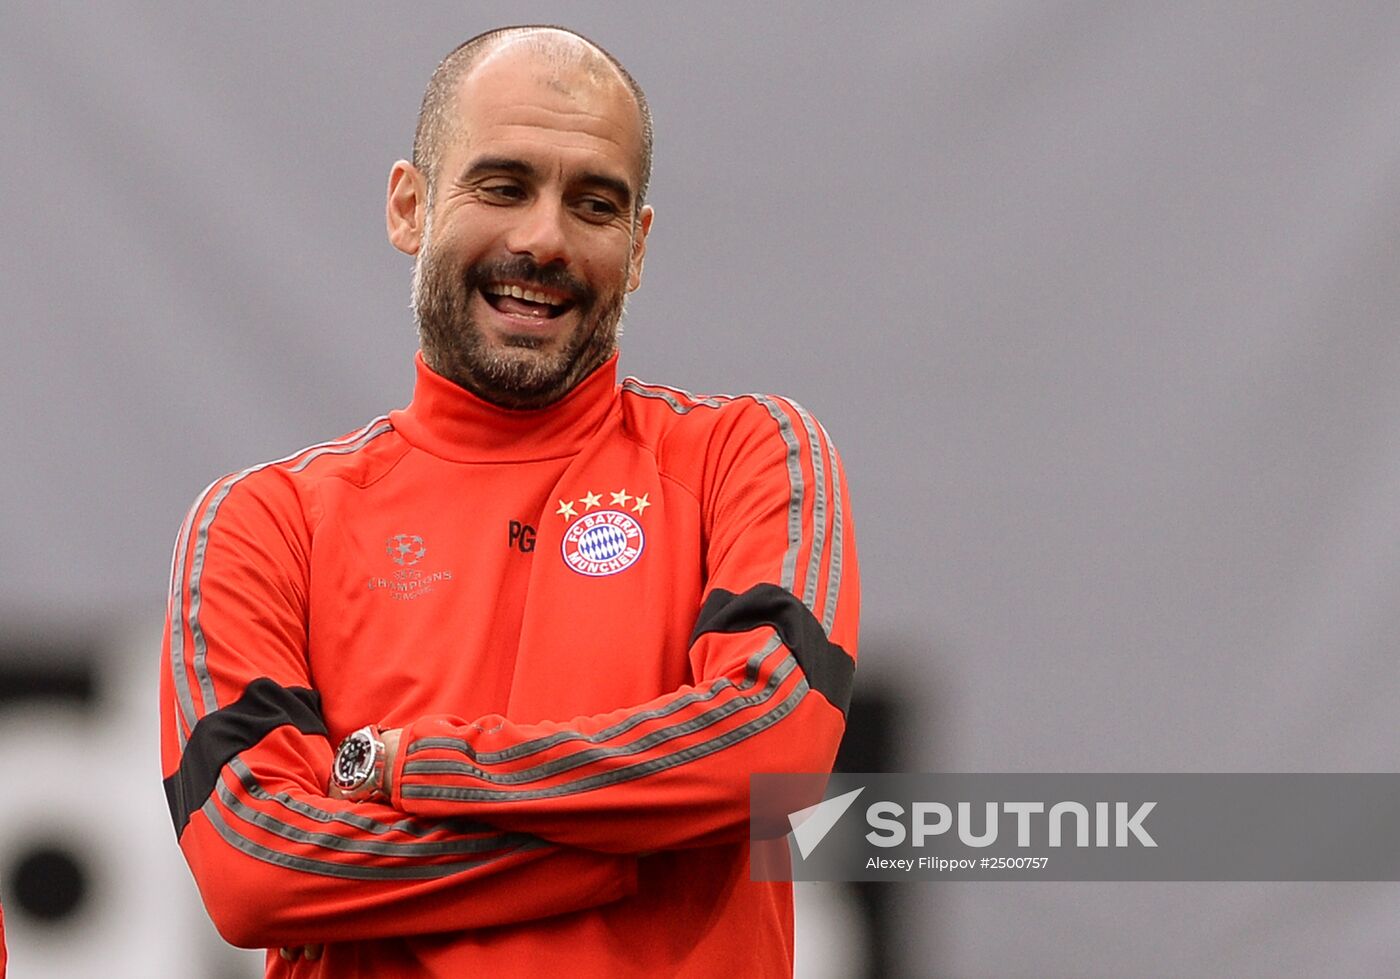 Football. FC Bayern's training session